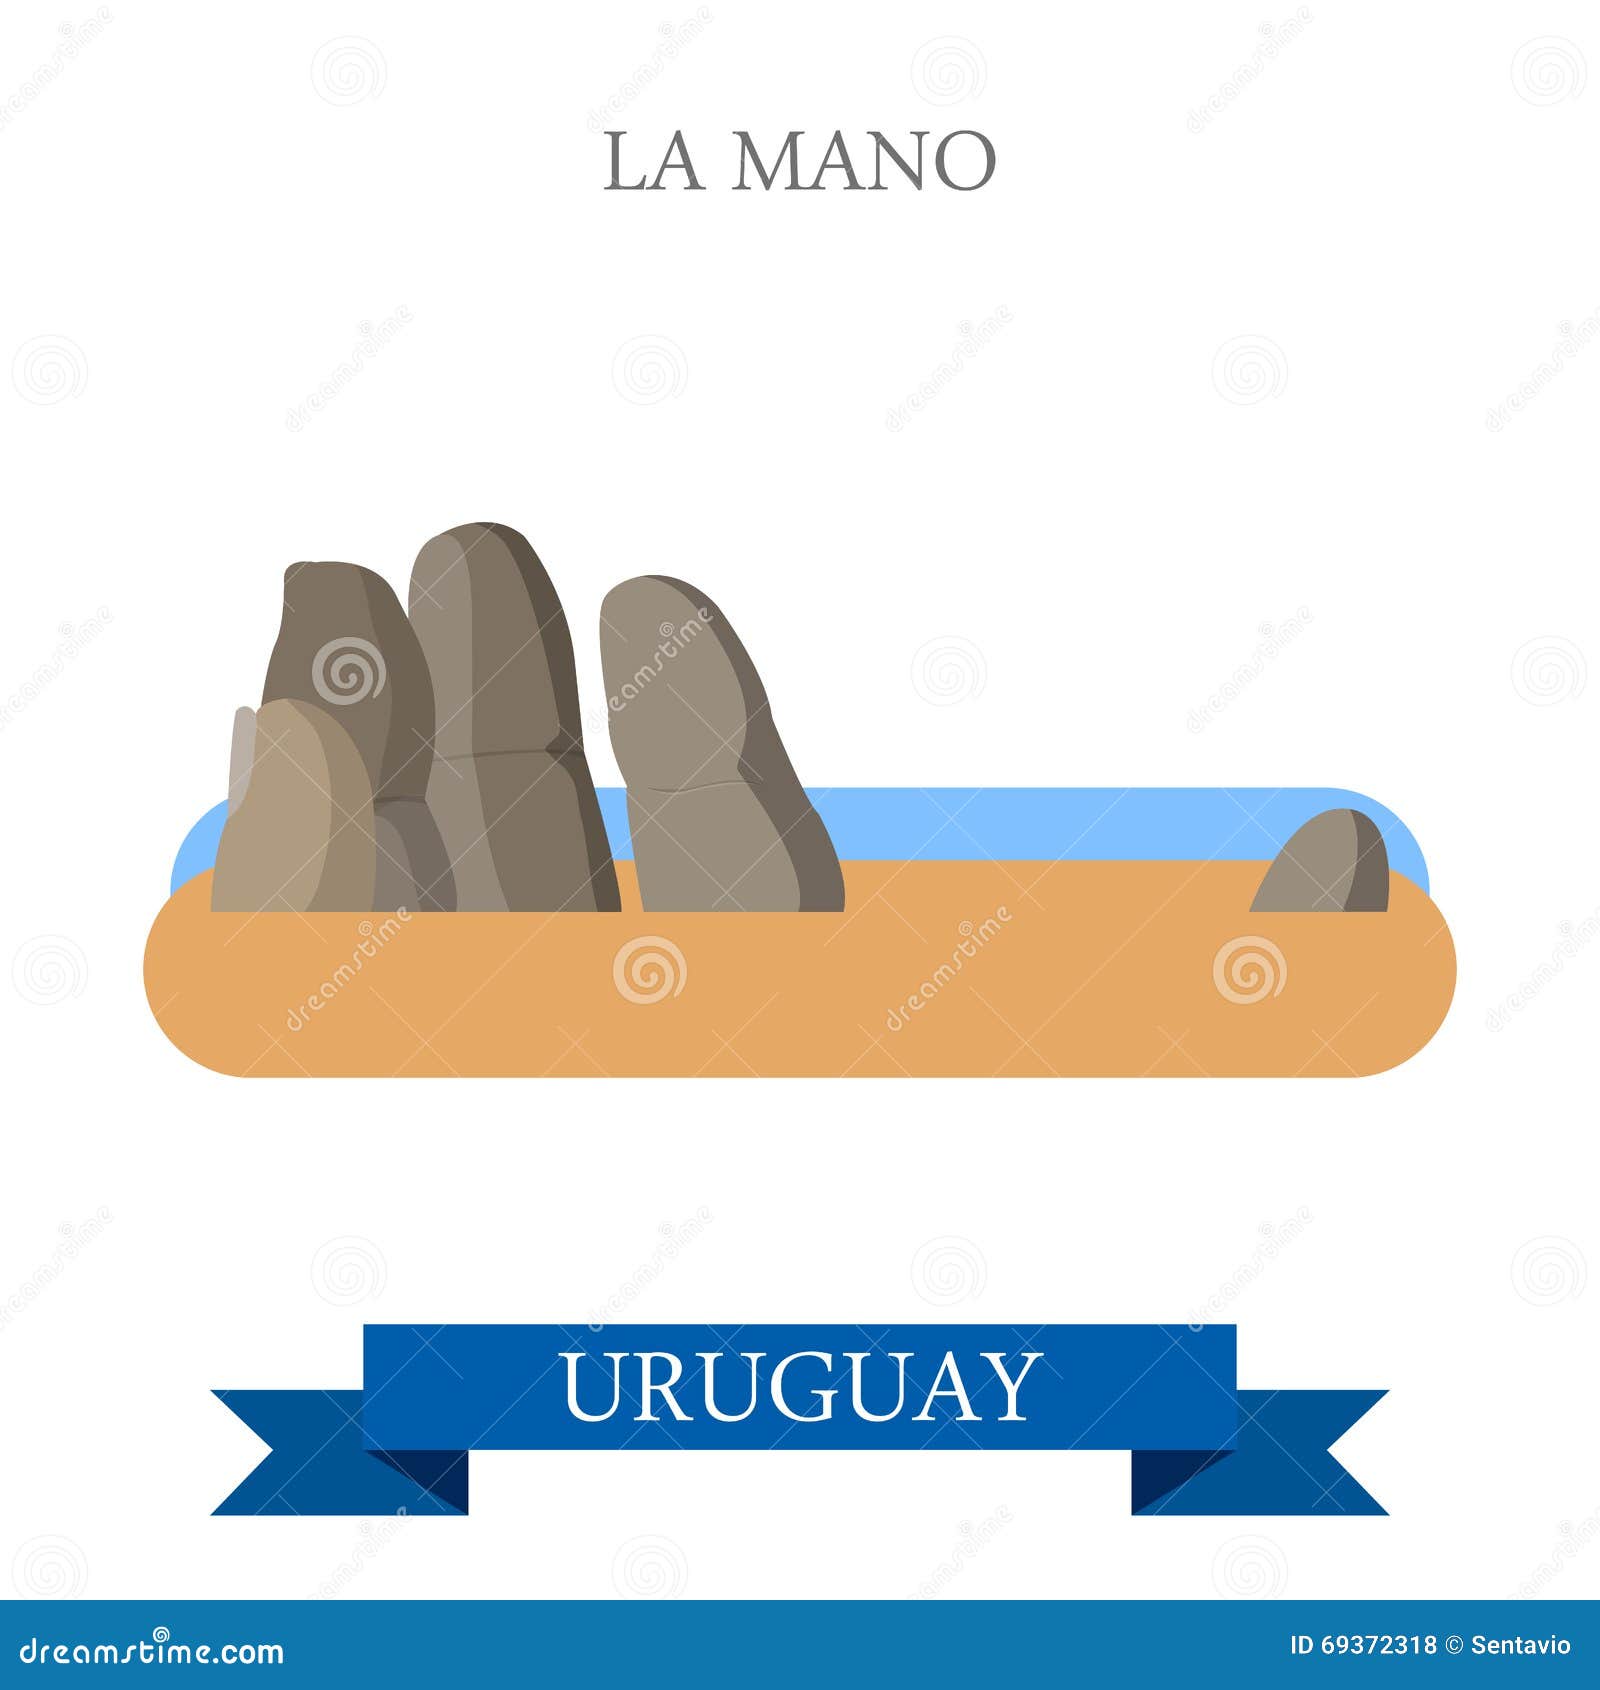 la mano statue in uruguay  flat attraction landmarks